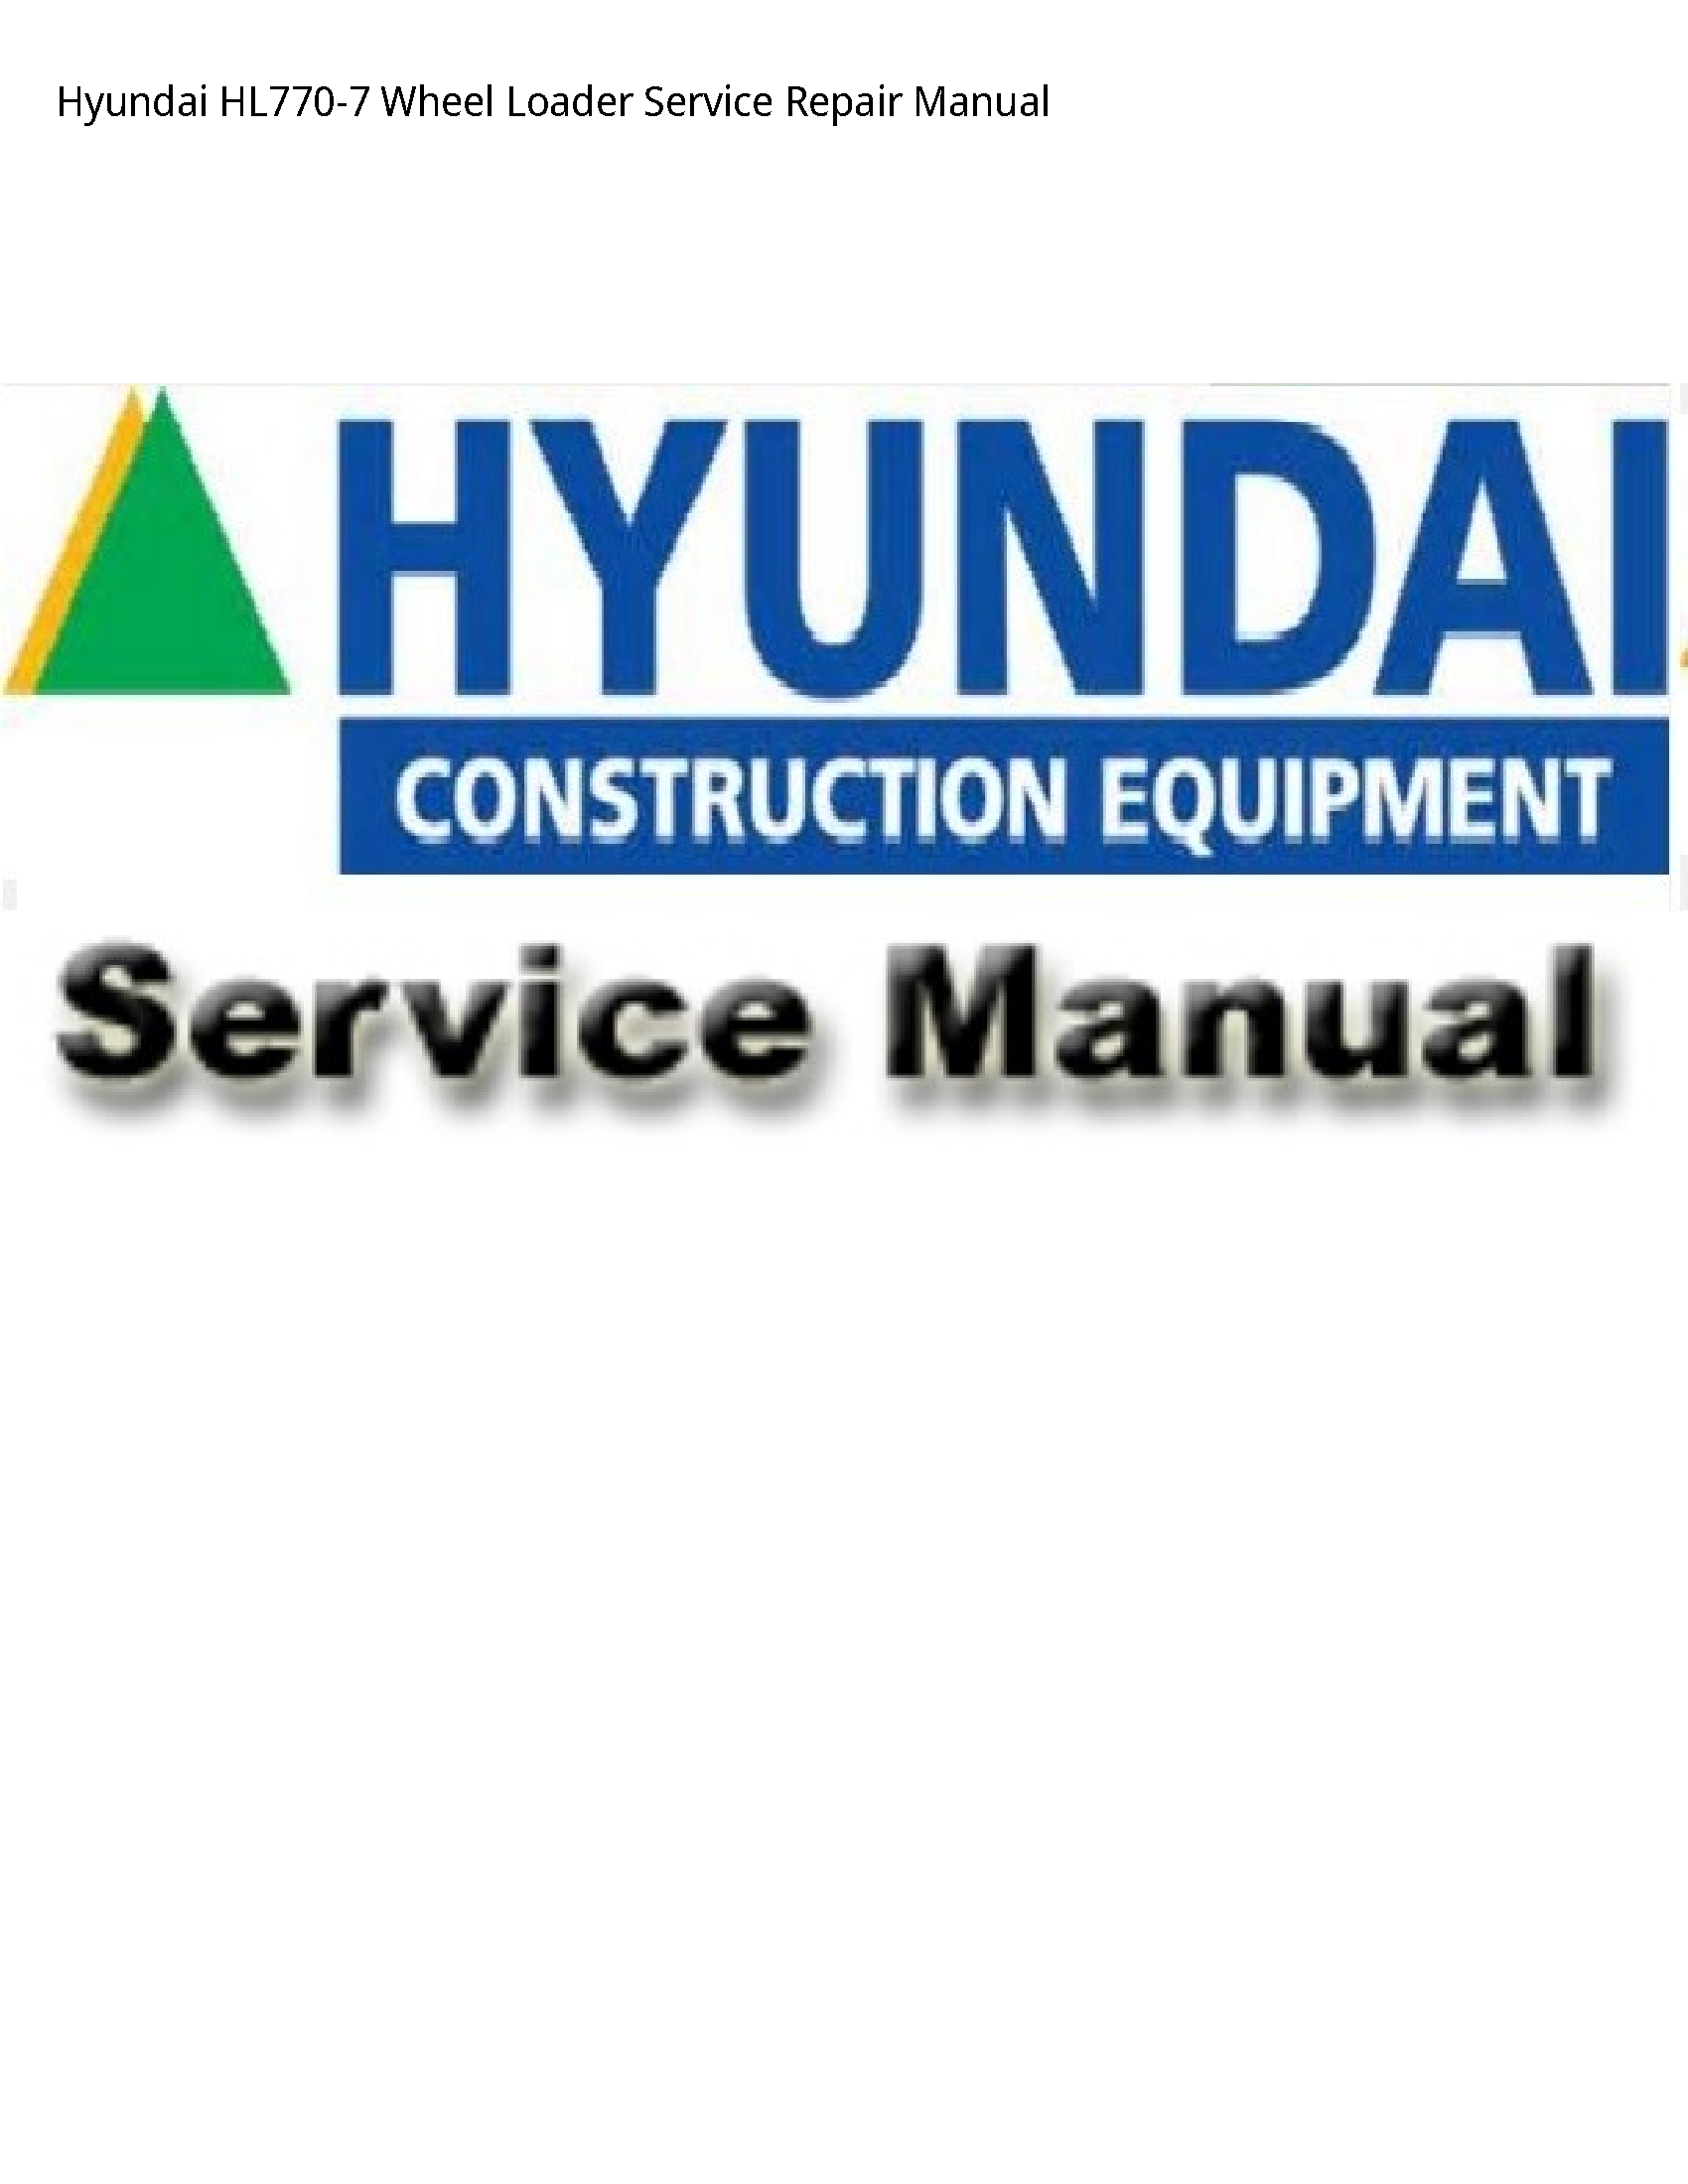 Hyundai HL770-7 Wheel Loader manual